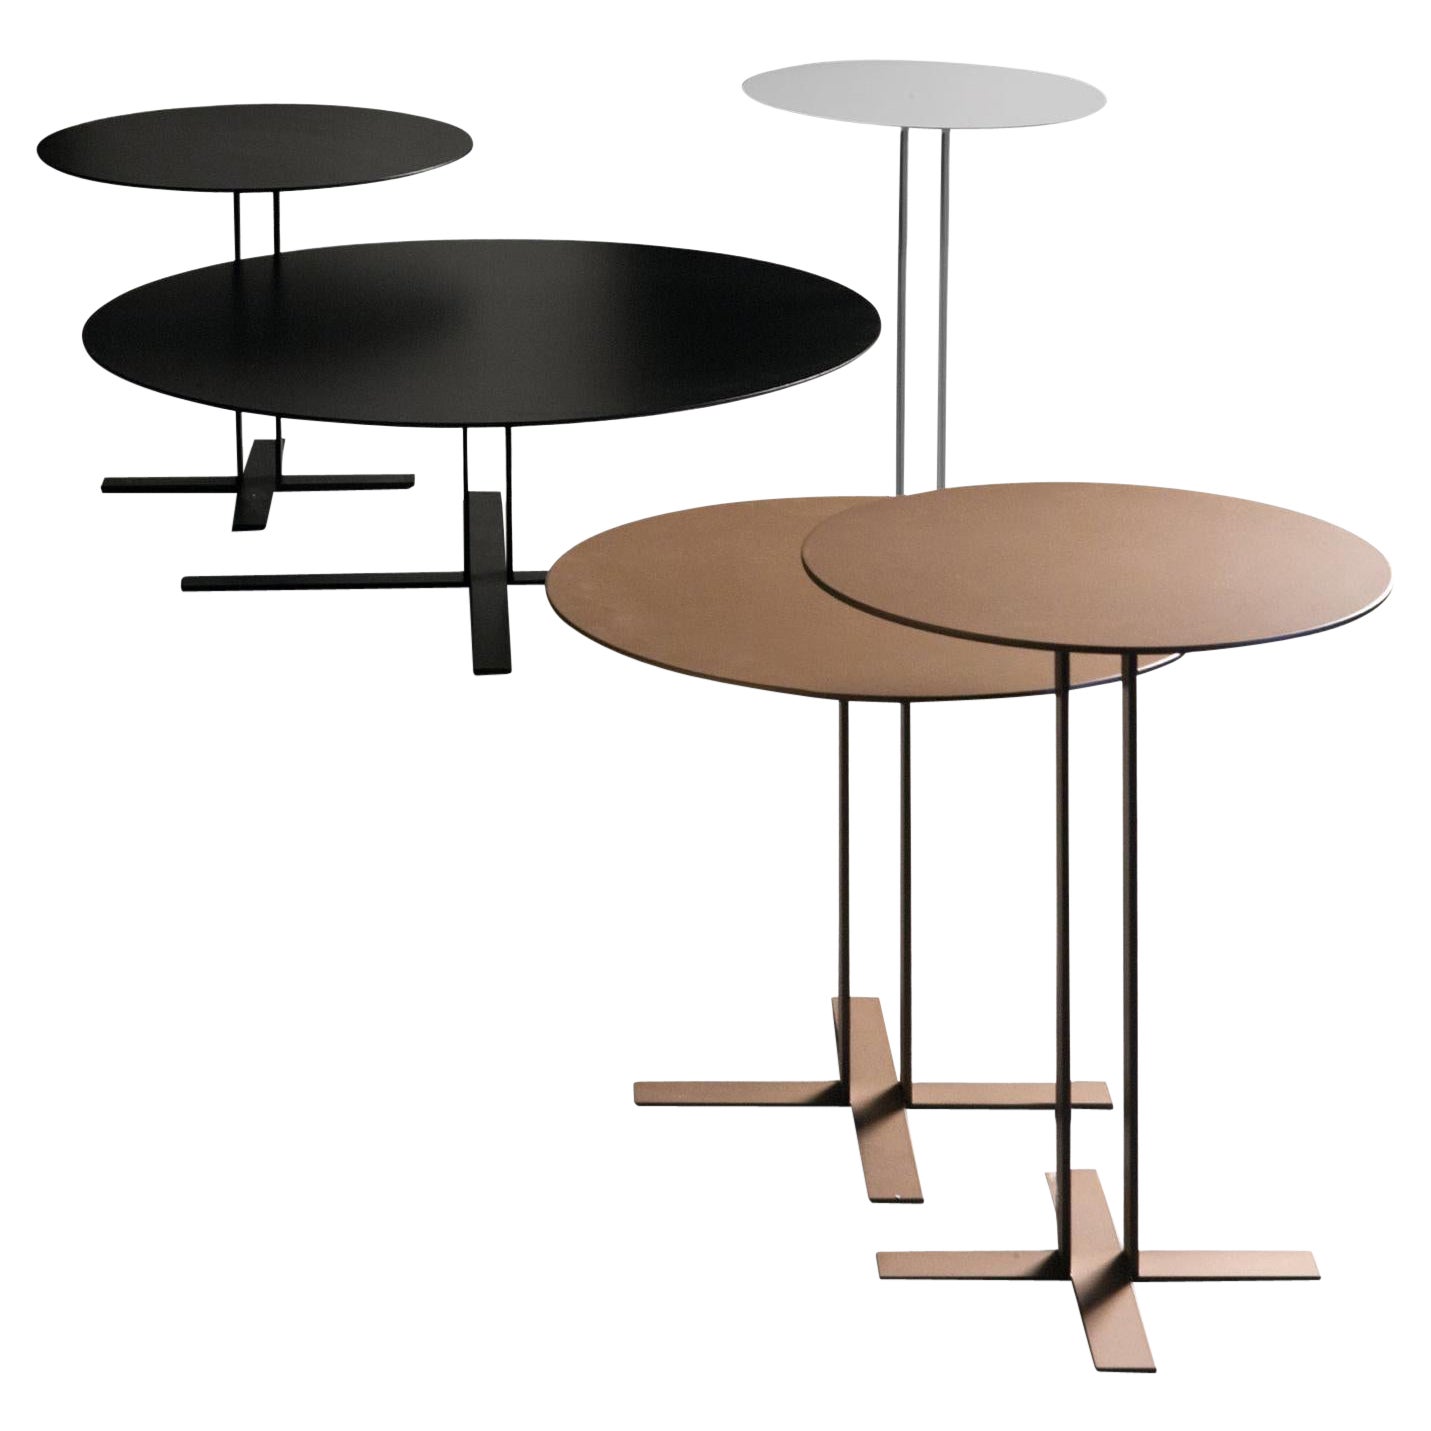 Petite table basse ronde Pi en bronze laqué mat de Giuseppe Vigan